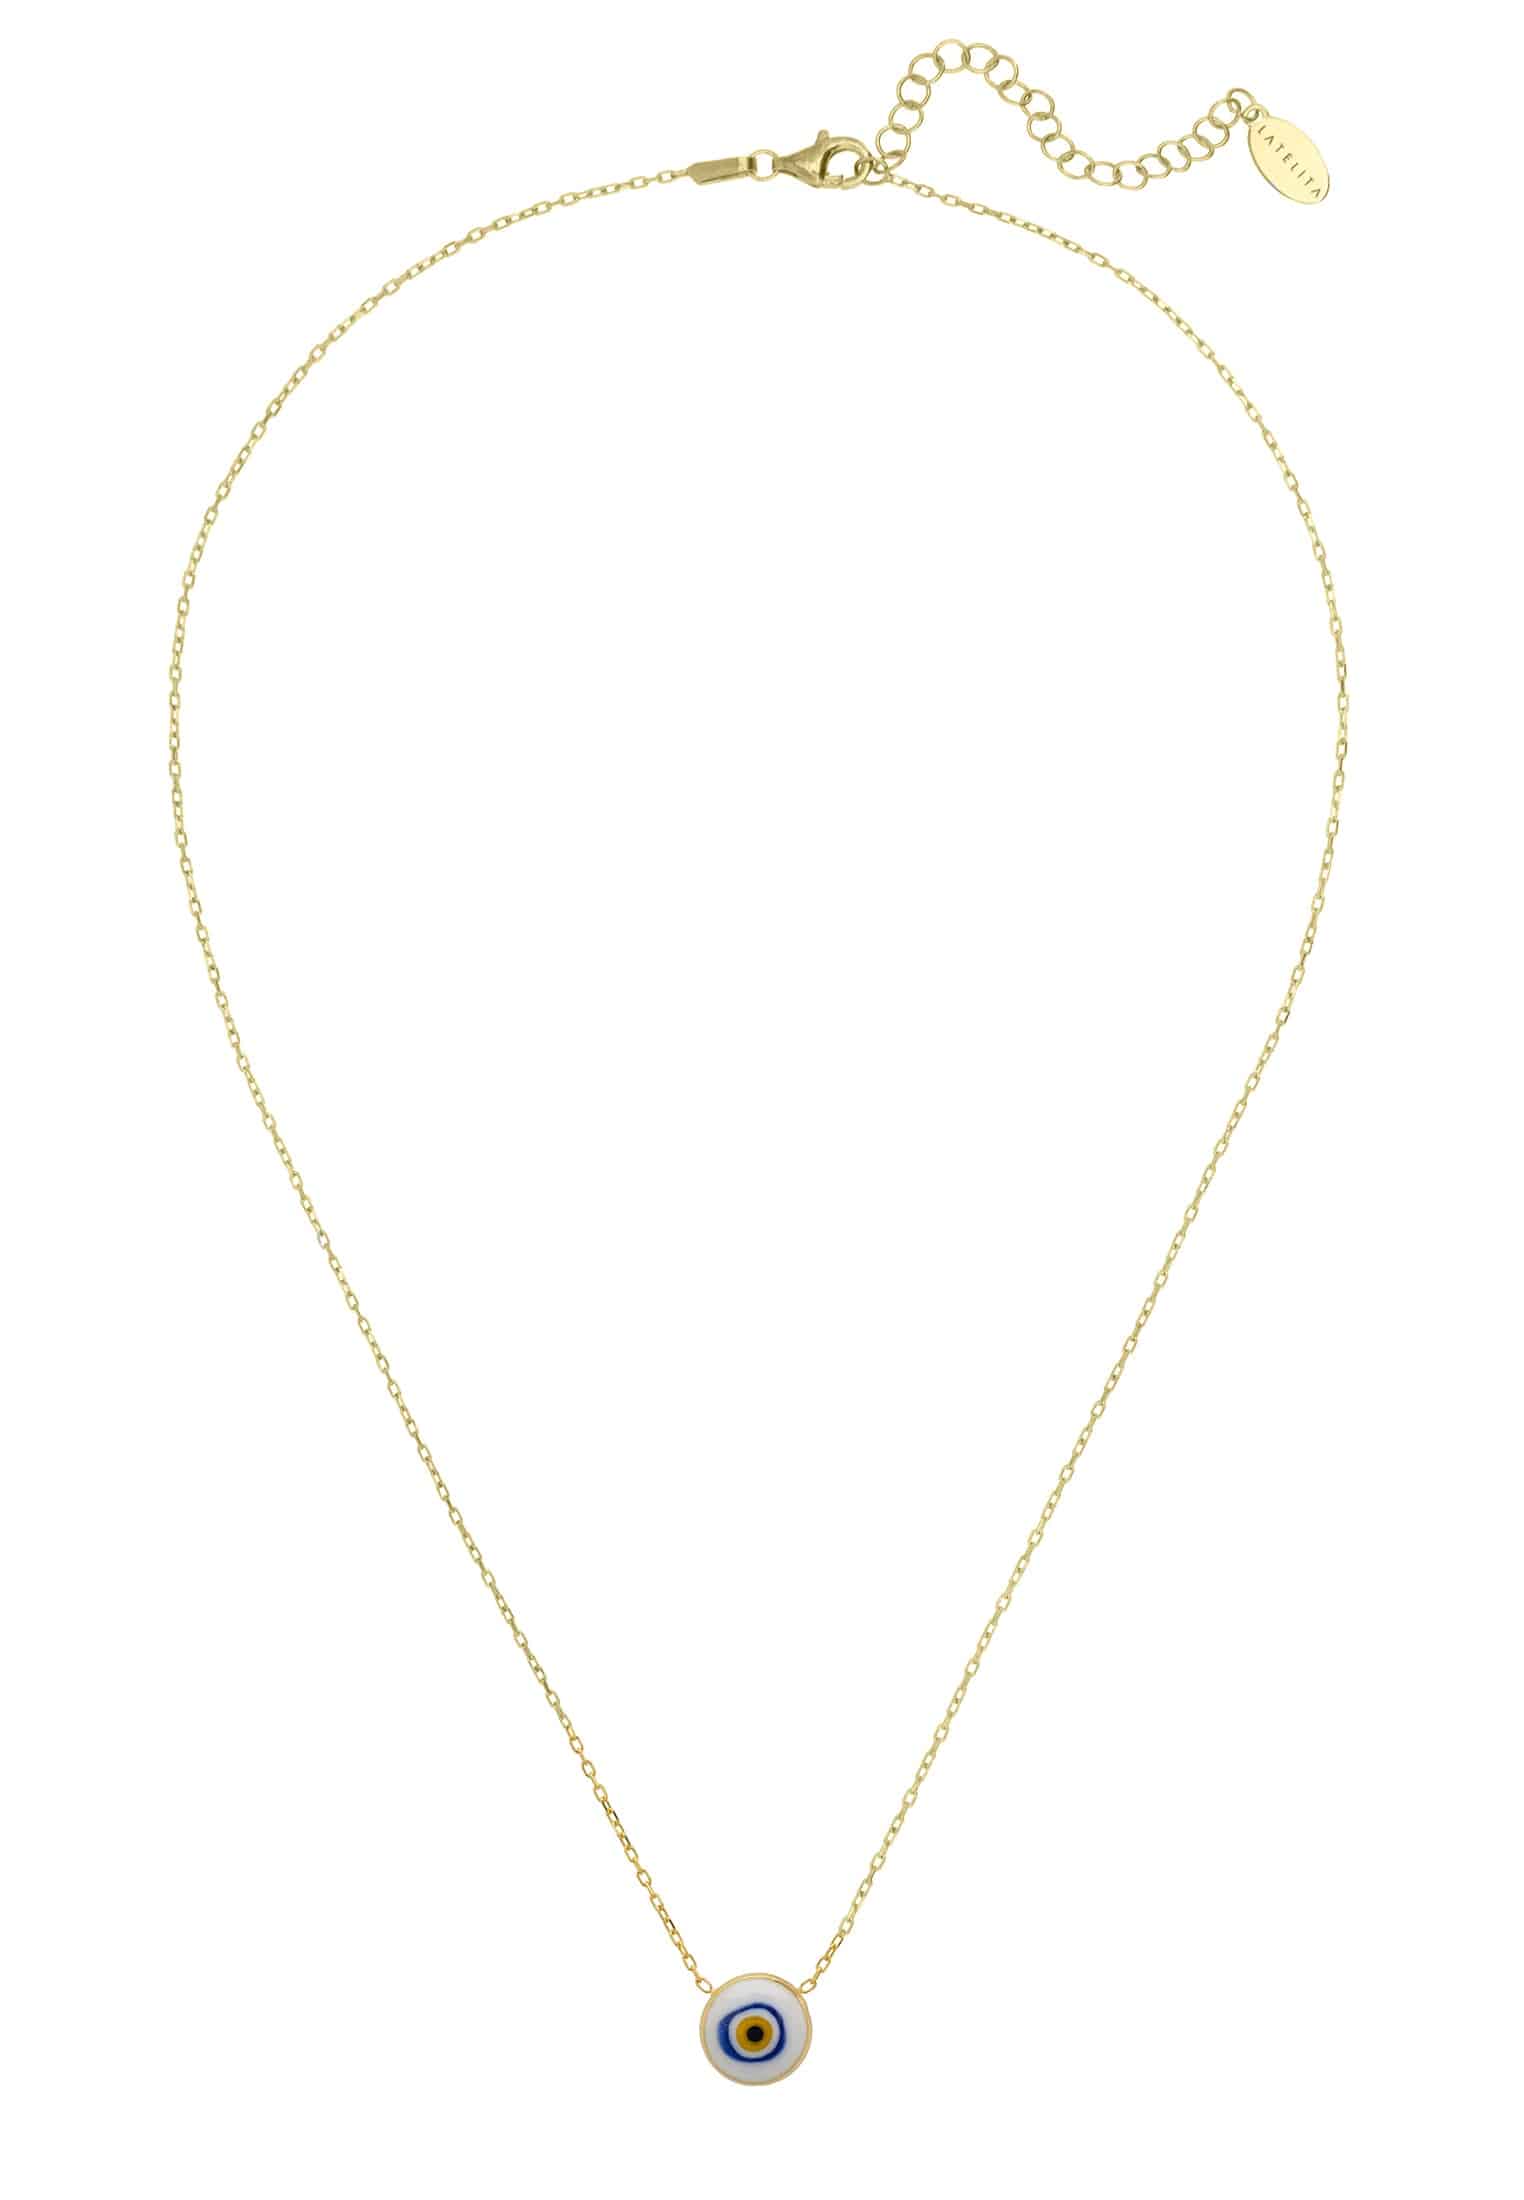 Gold Evil Eye Enamel Pendant Necklace - Talisman Charm Jewelry Bijou Her